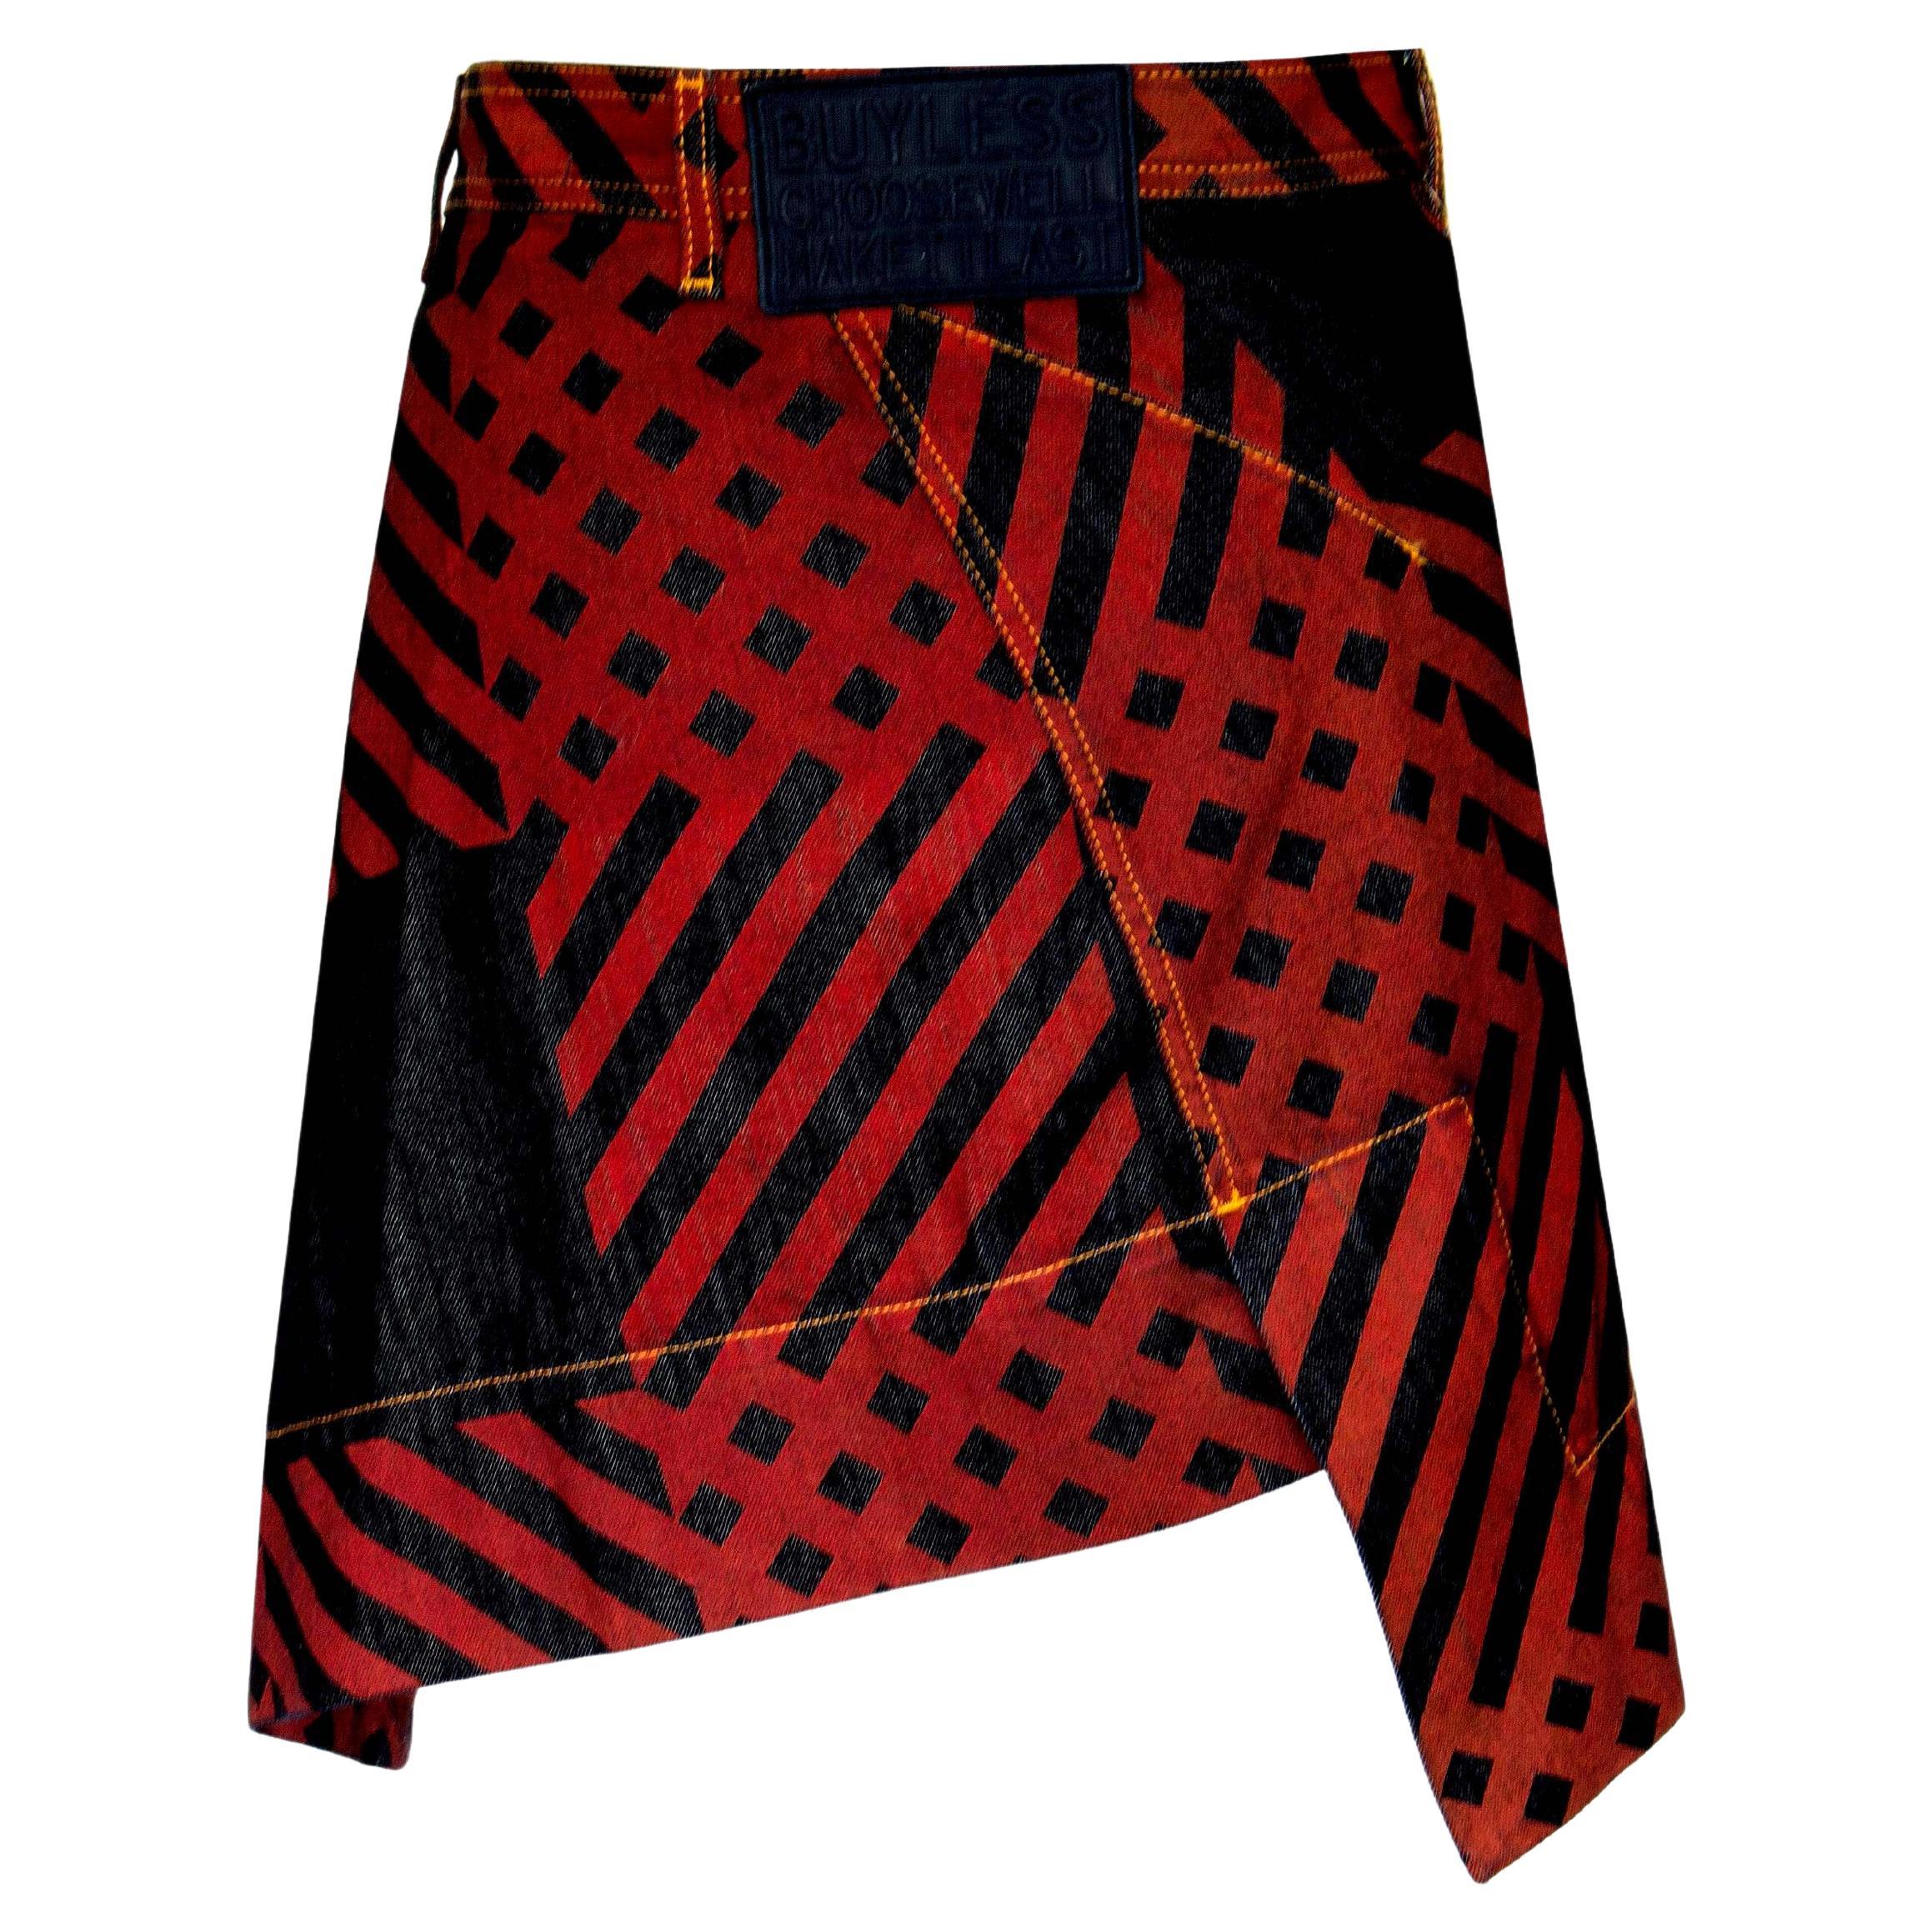 Product Details: Vivienne Westwood - Anglomania - Printed Denim Skirt - Maroon Red + Dark Blue Denim Stripe + Square Print - ‘Buy Less Choose Well Make It Last’ Logo (Back Skirt) - Asymmetric Hemline Detail - Orb Logo Button - 
Label: Vivienne